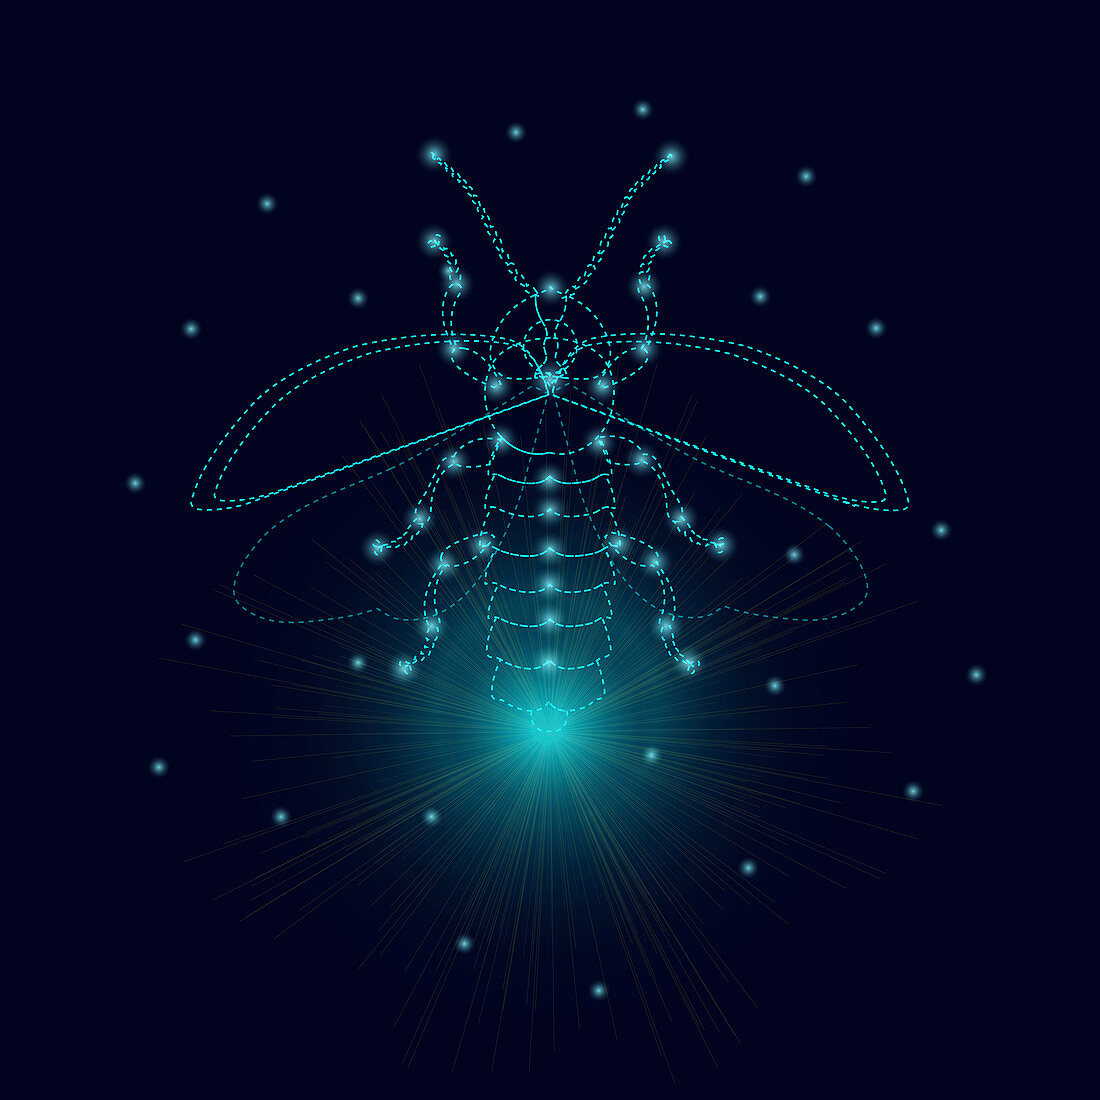 Luminous firefly, conceptual illustration